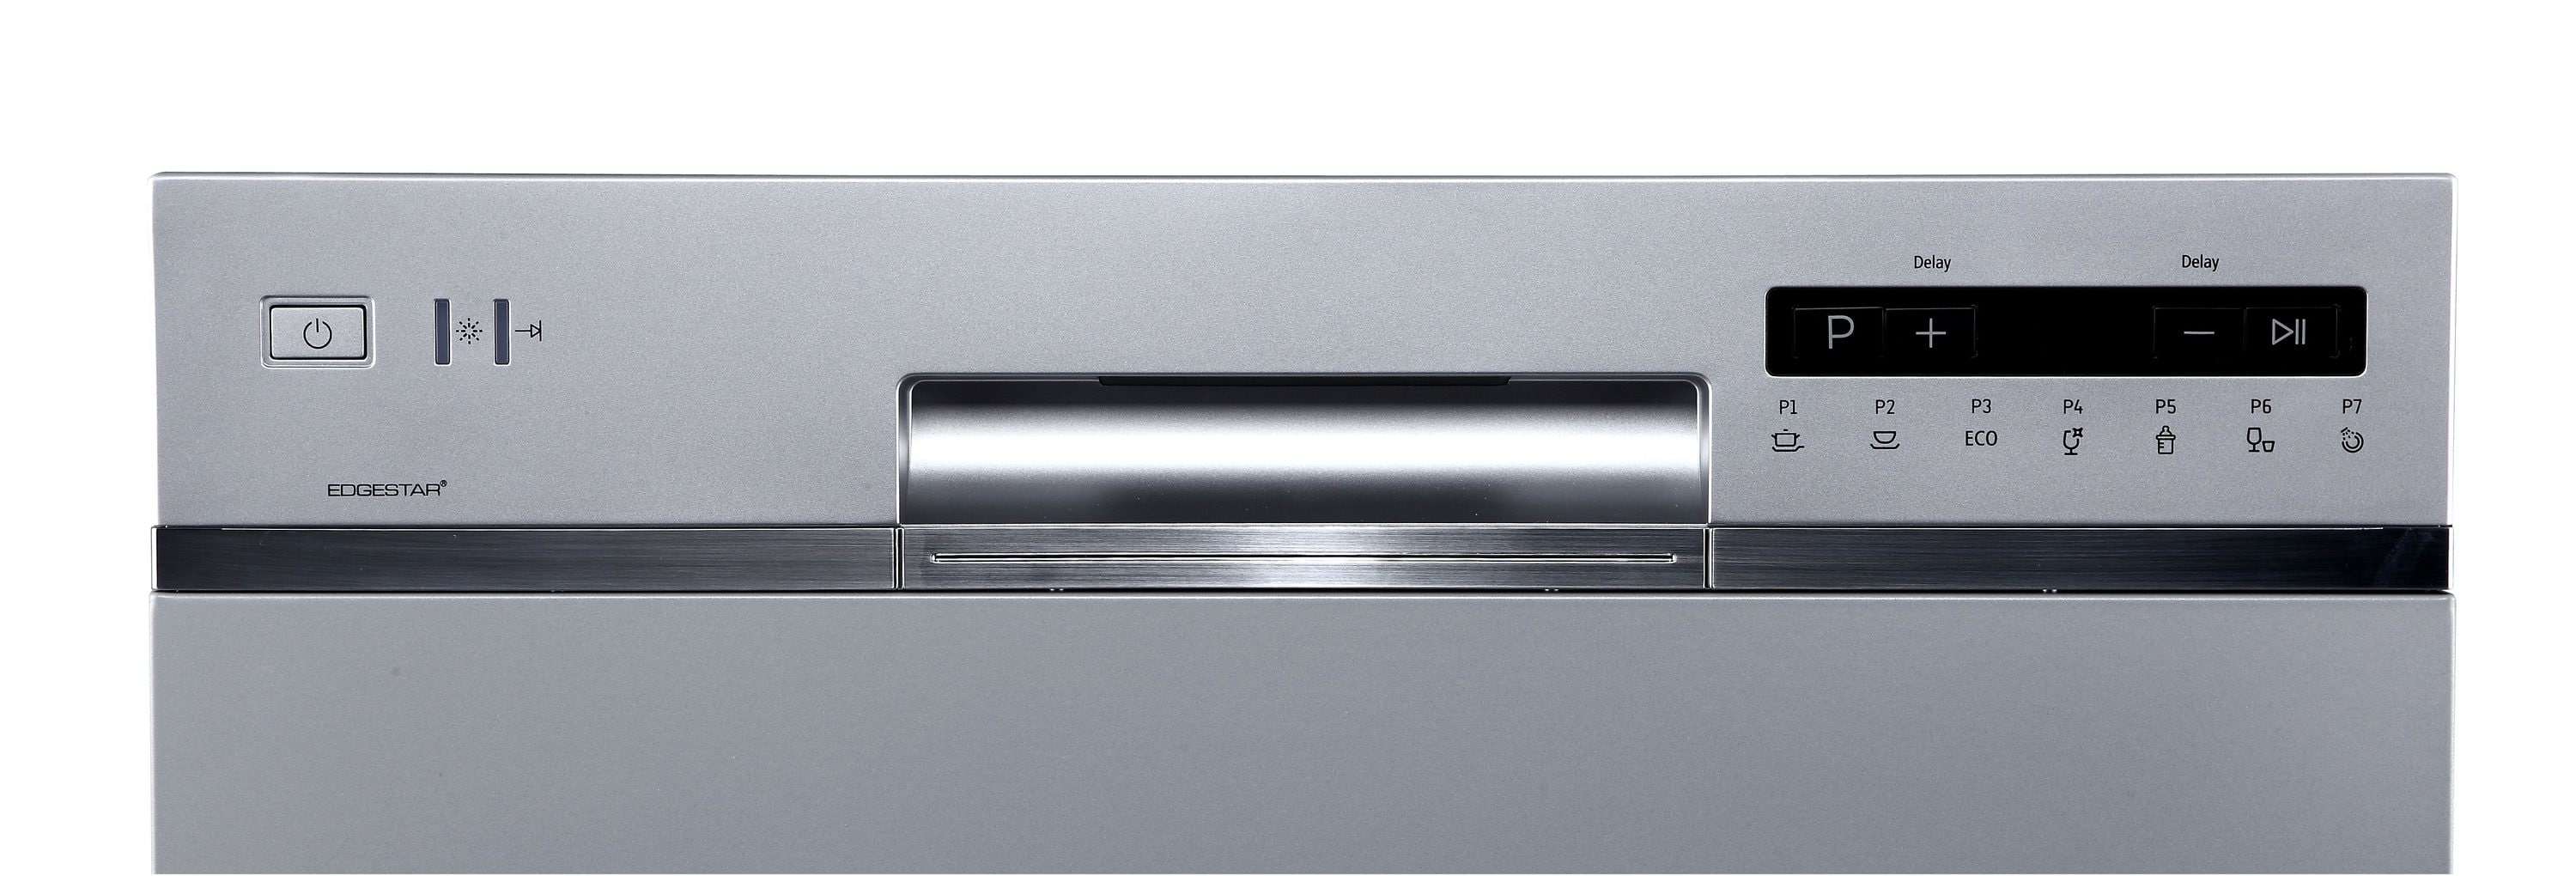 MUELLER 21 in. Professional Digital Portable Countertop Dishwasher